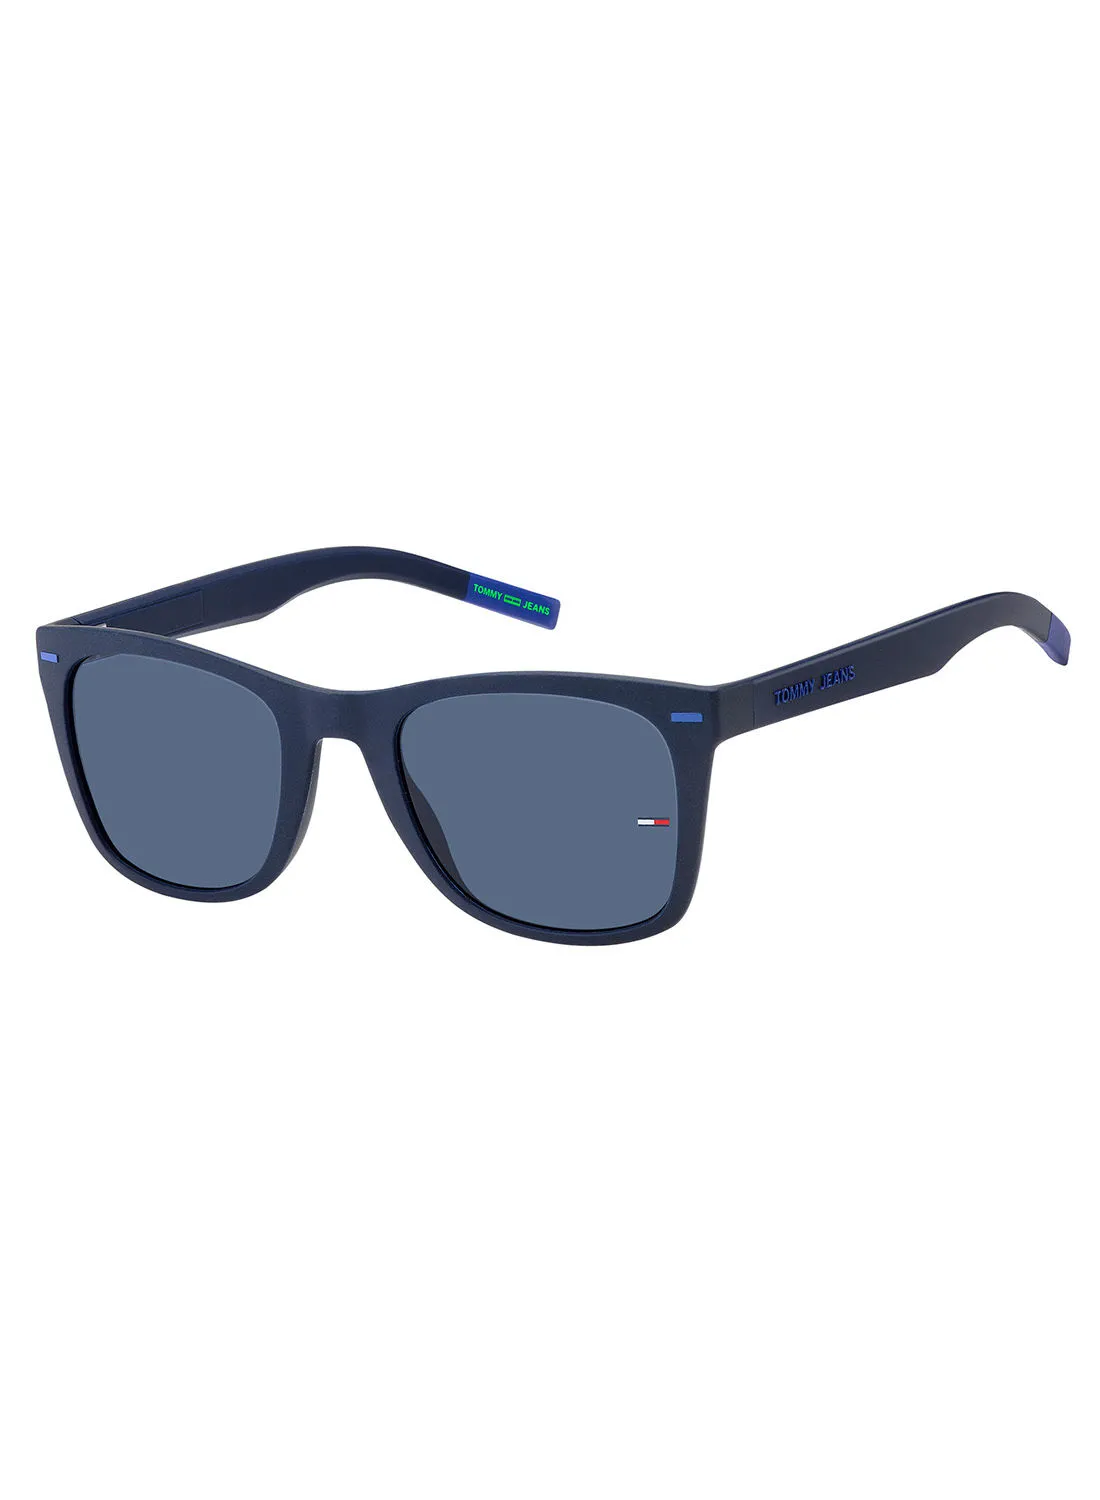 TOMMY HILFIGER UV Protection Square Eyewear Sunglasses TJ 0040/S       BLUE AZUR 51